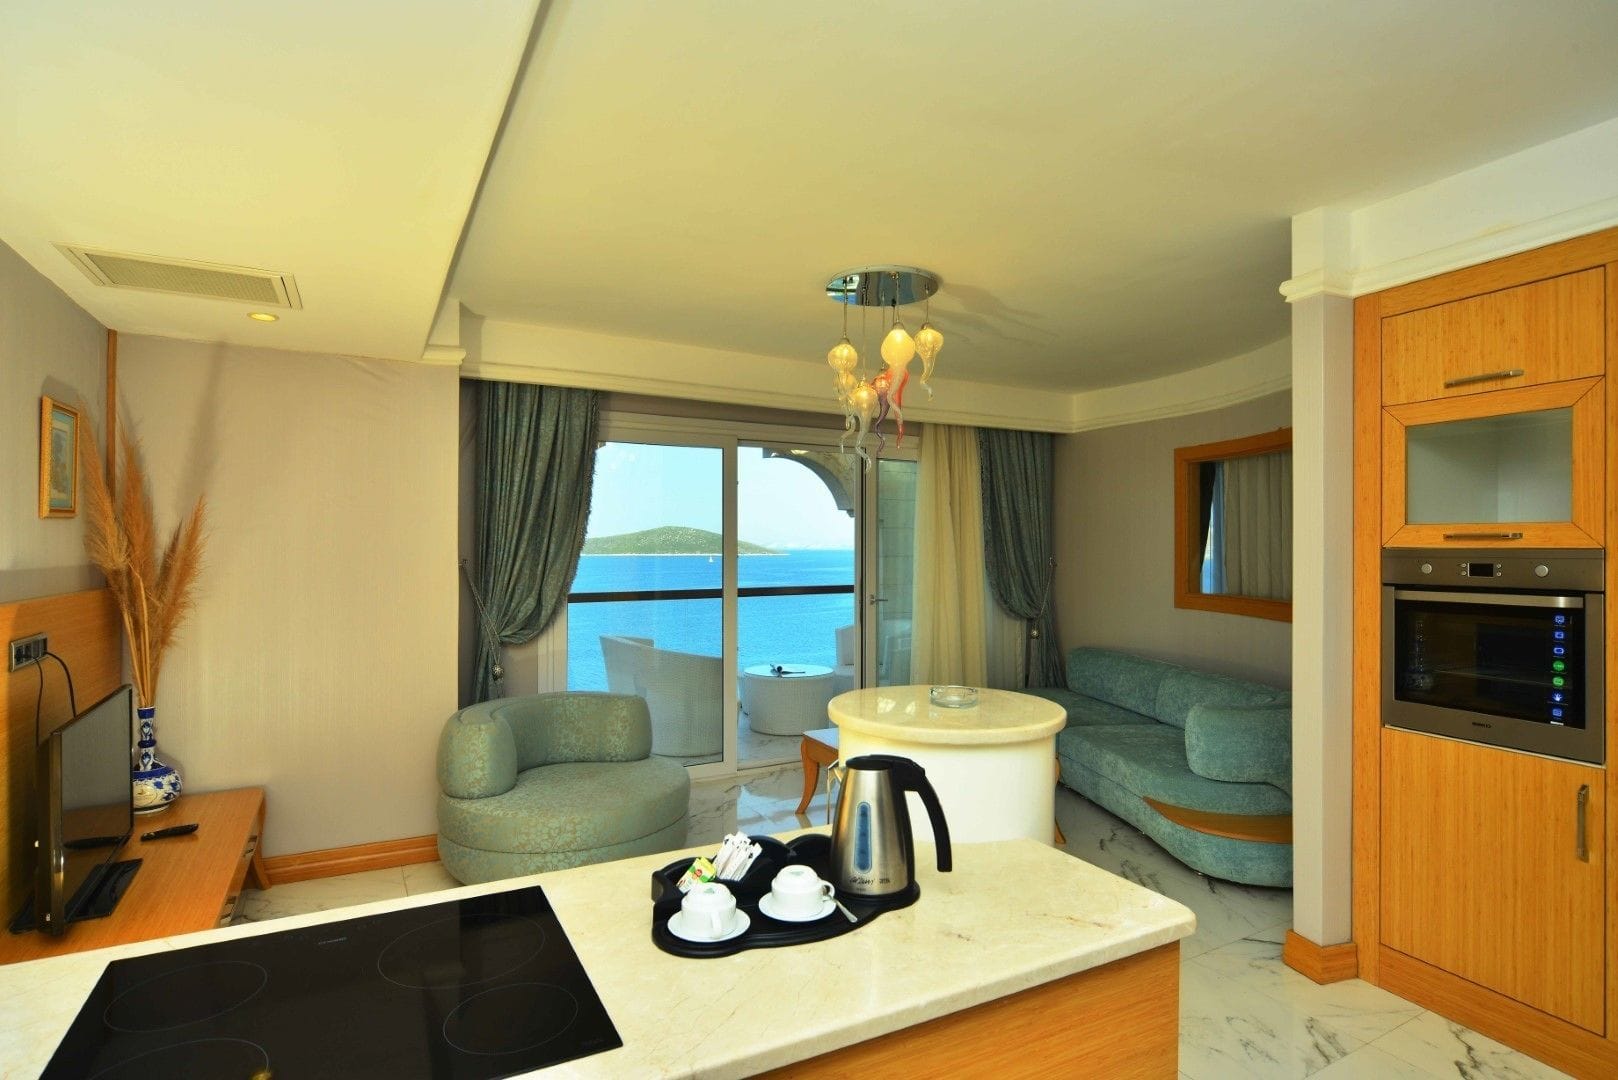 Bvs Bosphorus Resort Hotel & Spa